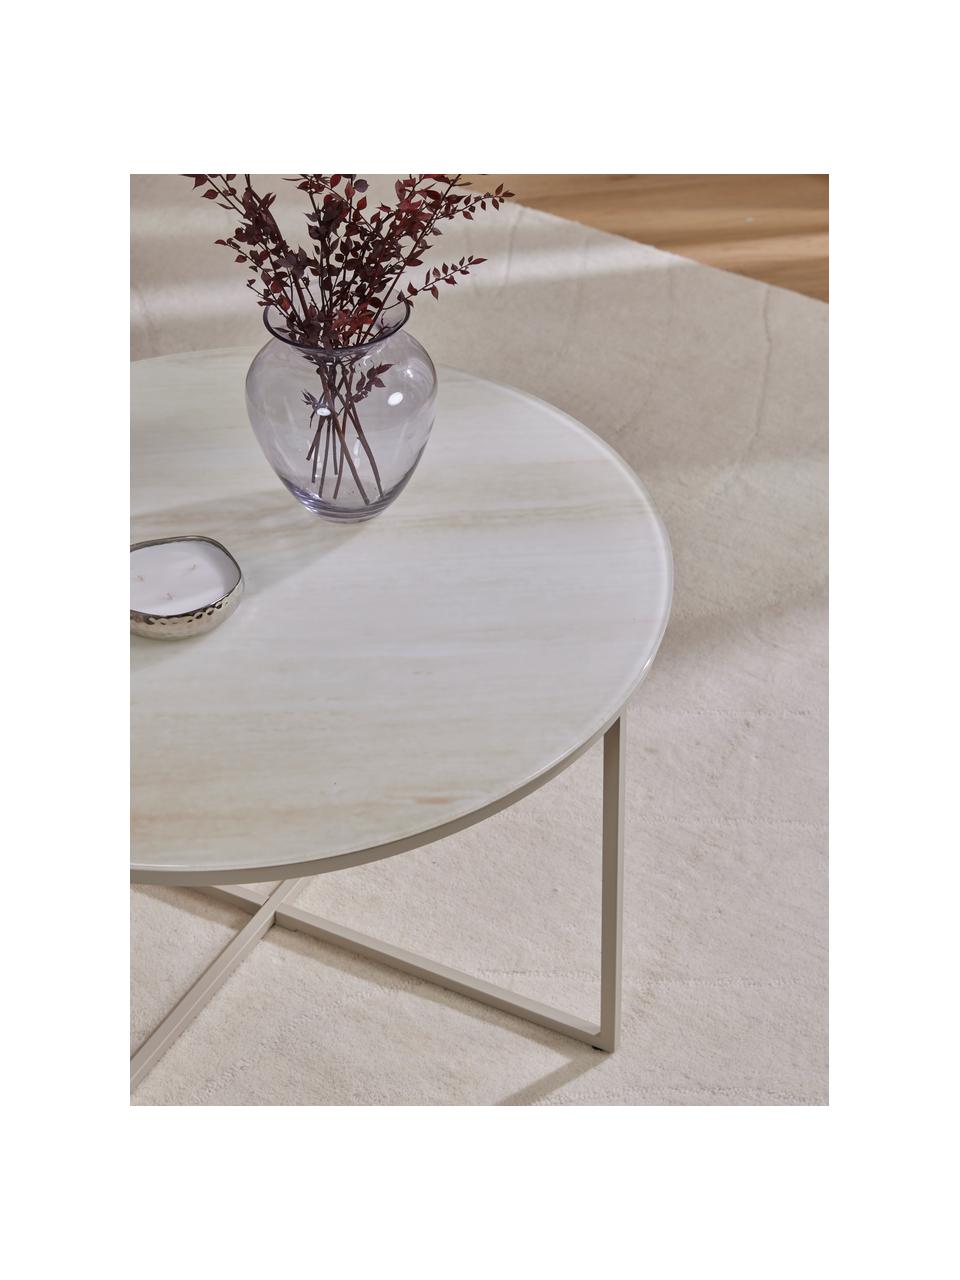 Table basse ronde verre aspect travertin Antigua, Aspect travertin, beige, Ø 80 cm